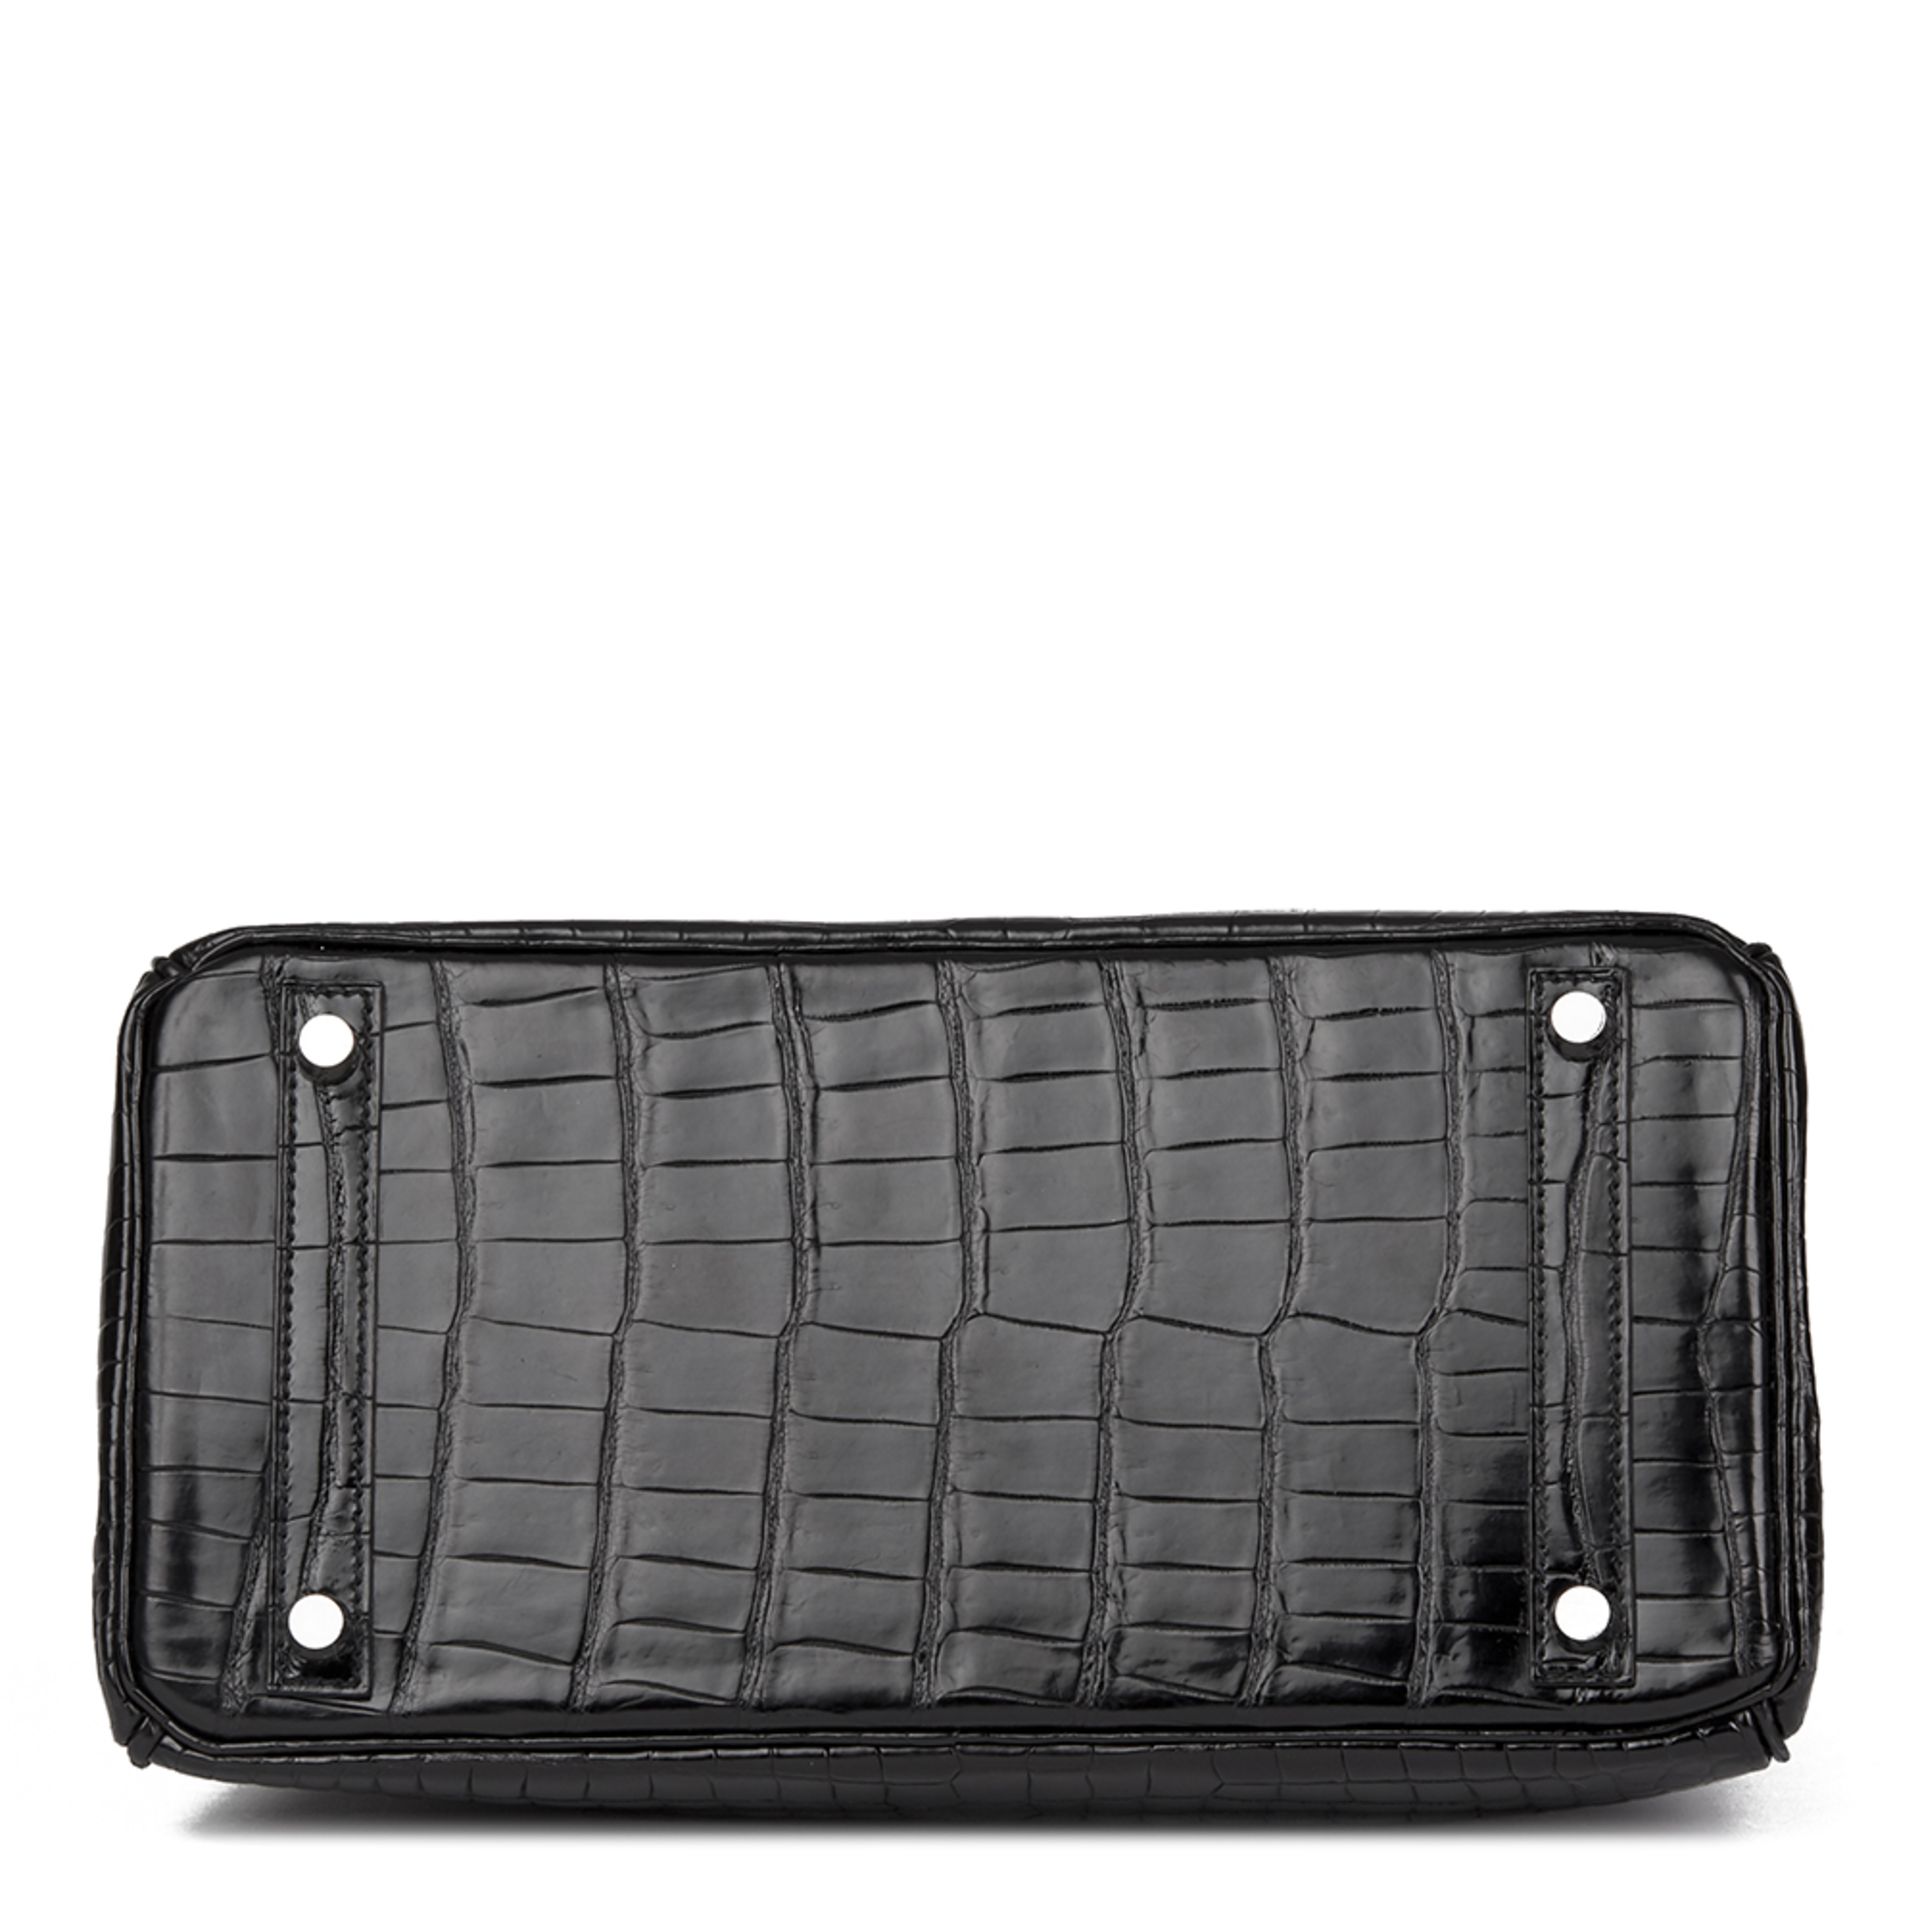 Hermès Black Shiny Porosus Crocodile Leather Birkin 30Cm - Image 9 of 12